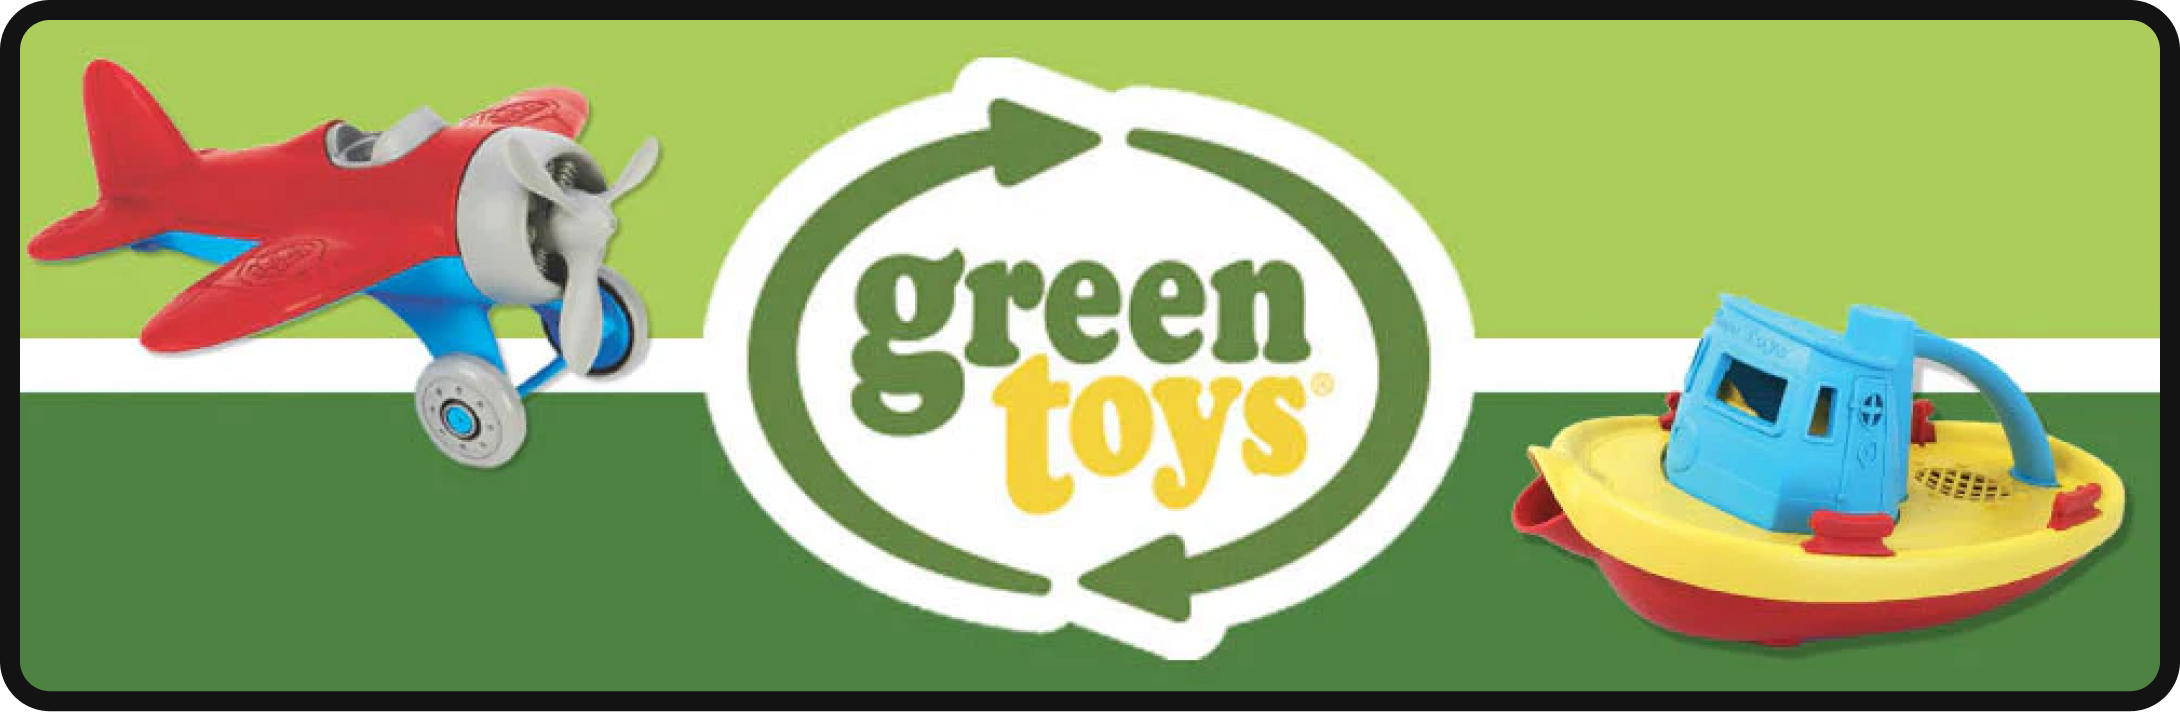 Green toys